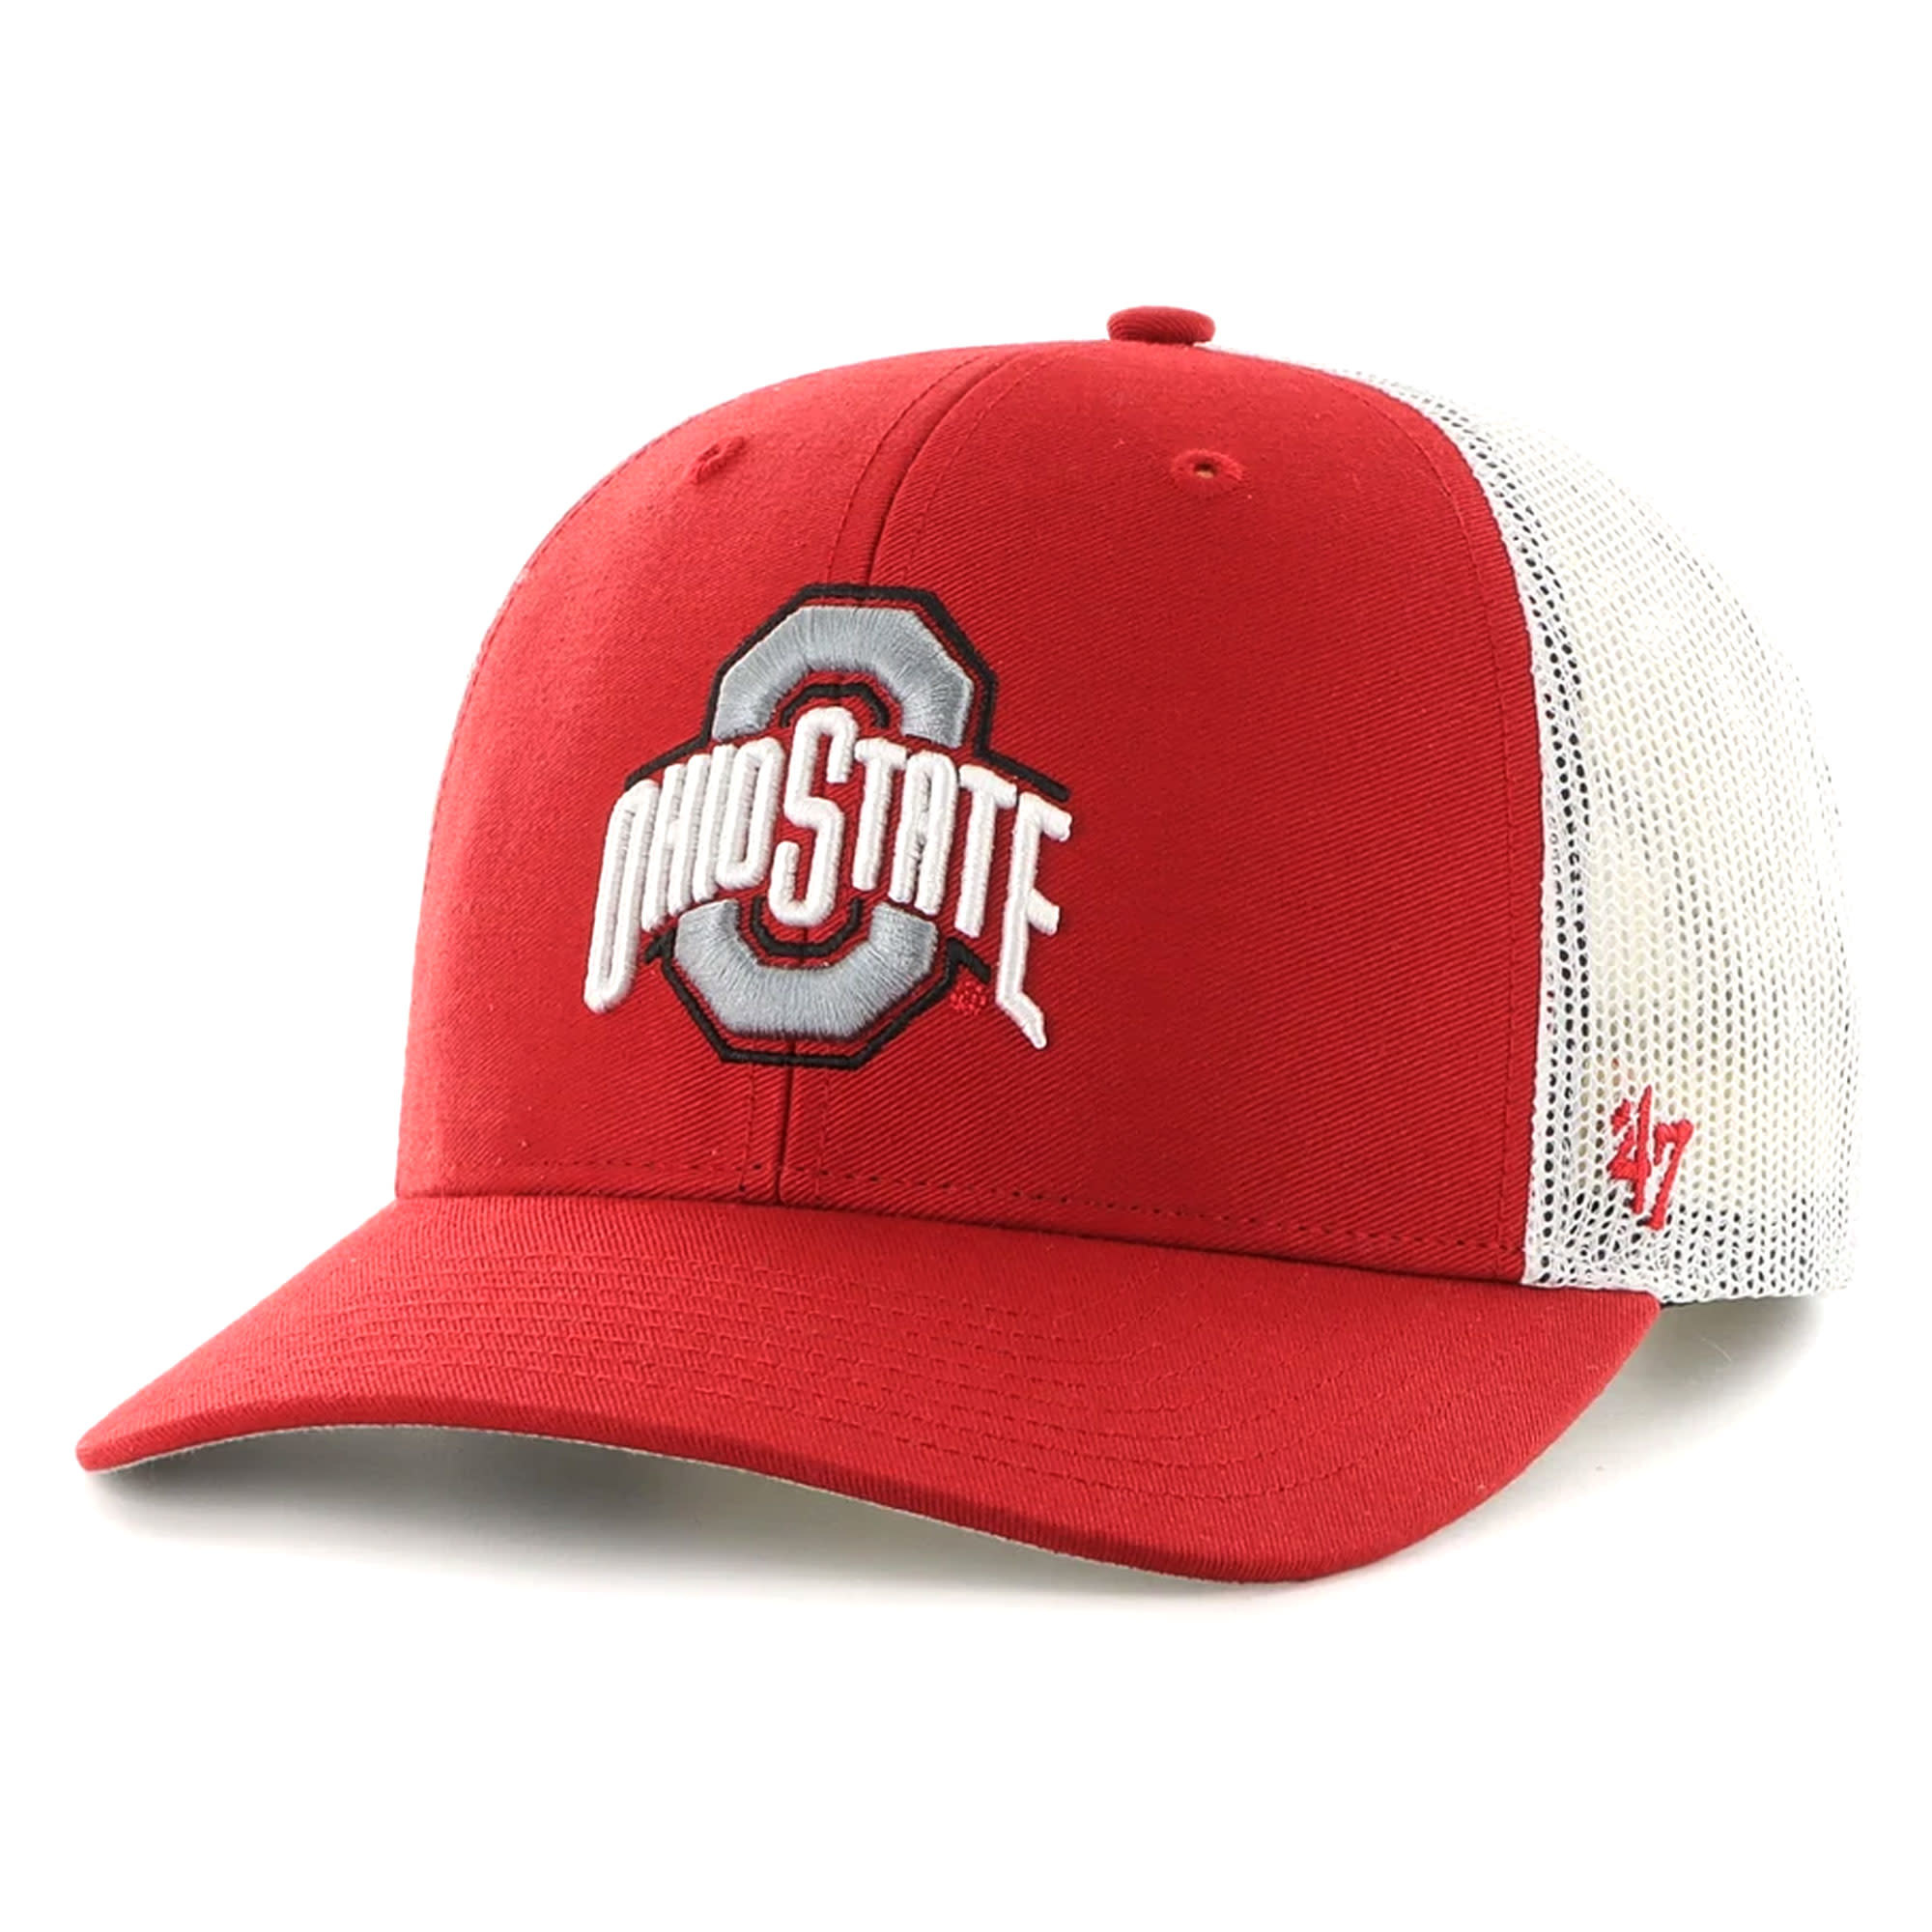 47 Women's Ohio State Buckeyes Rosette Clean Up Adjustable Hat